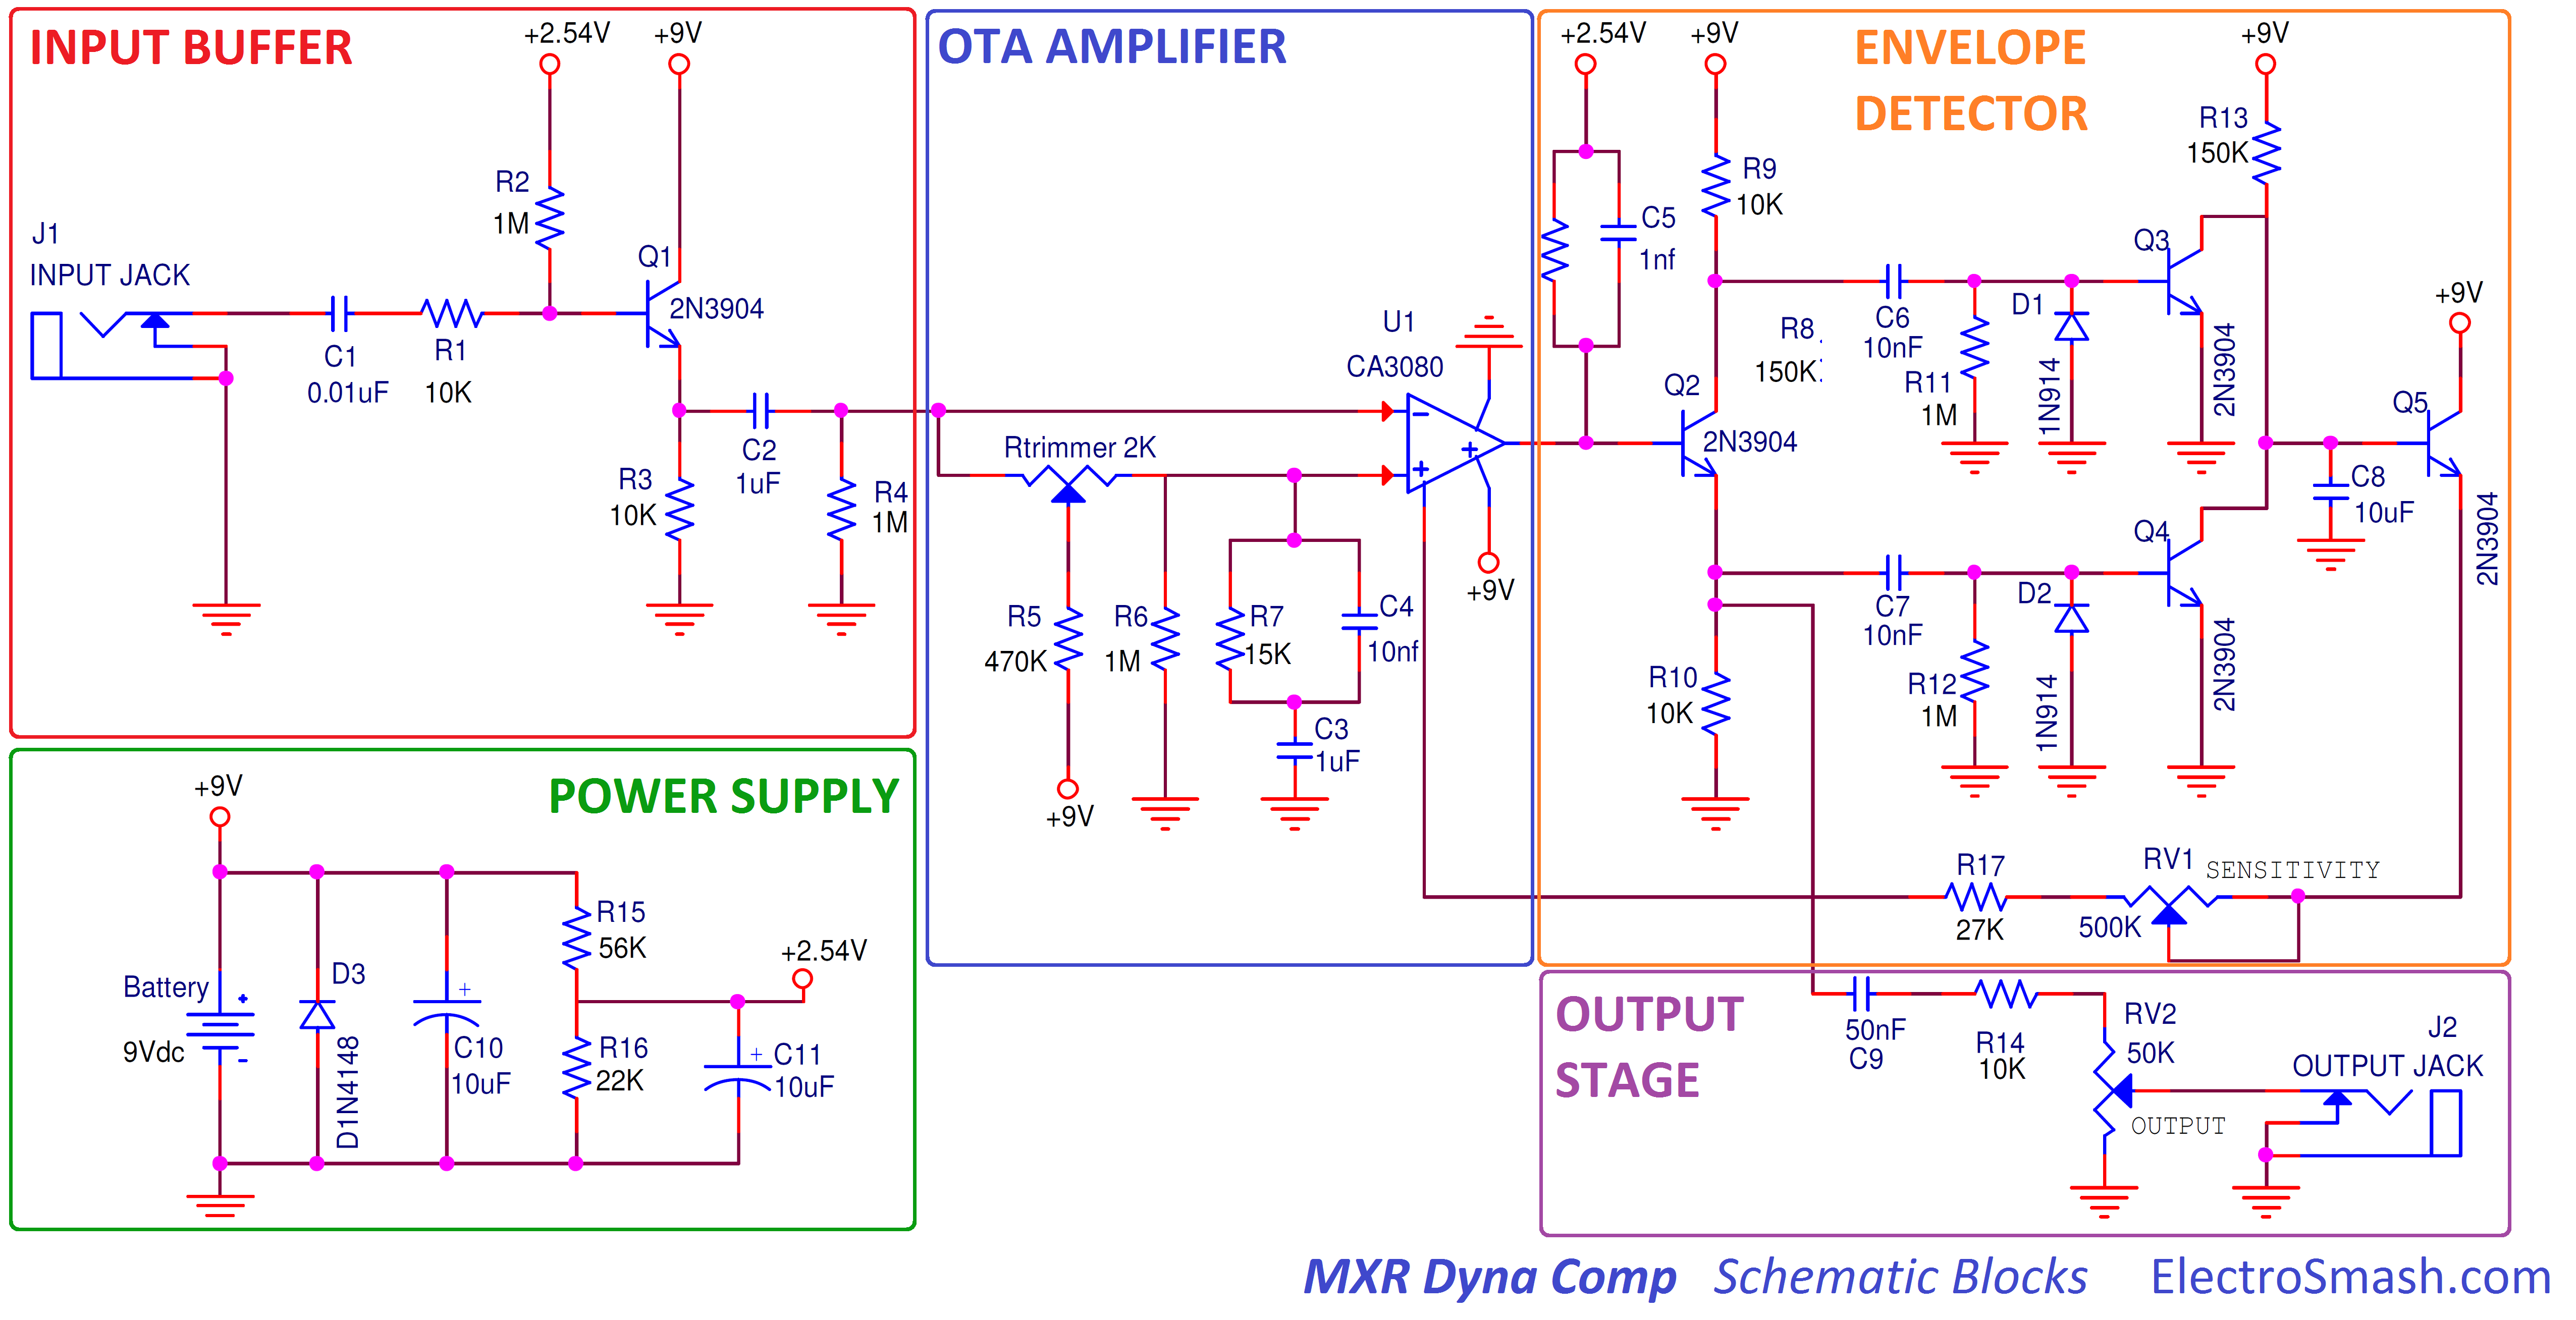 ElectroSmash - MXR Dyna Comp Analysis